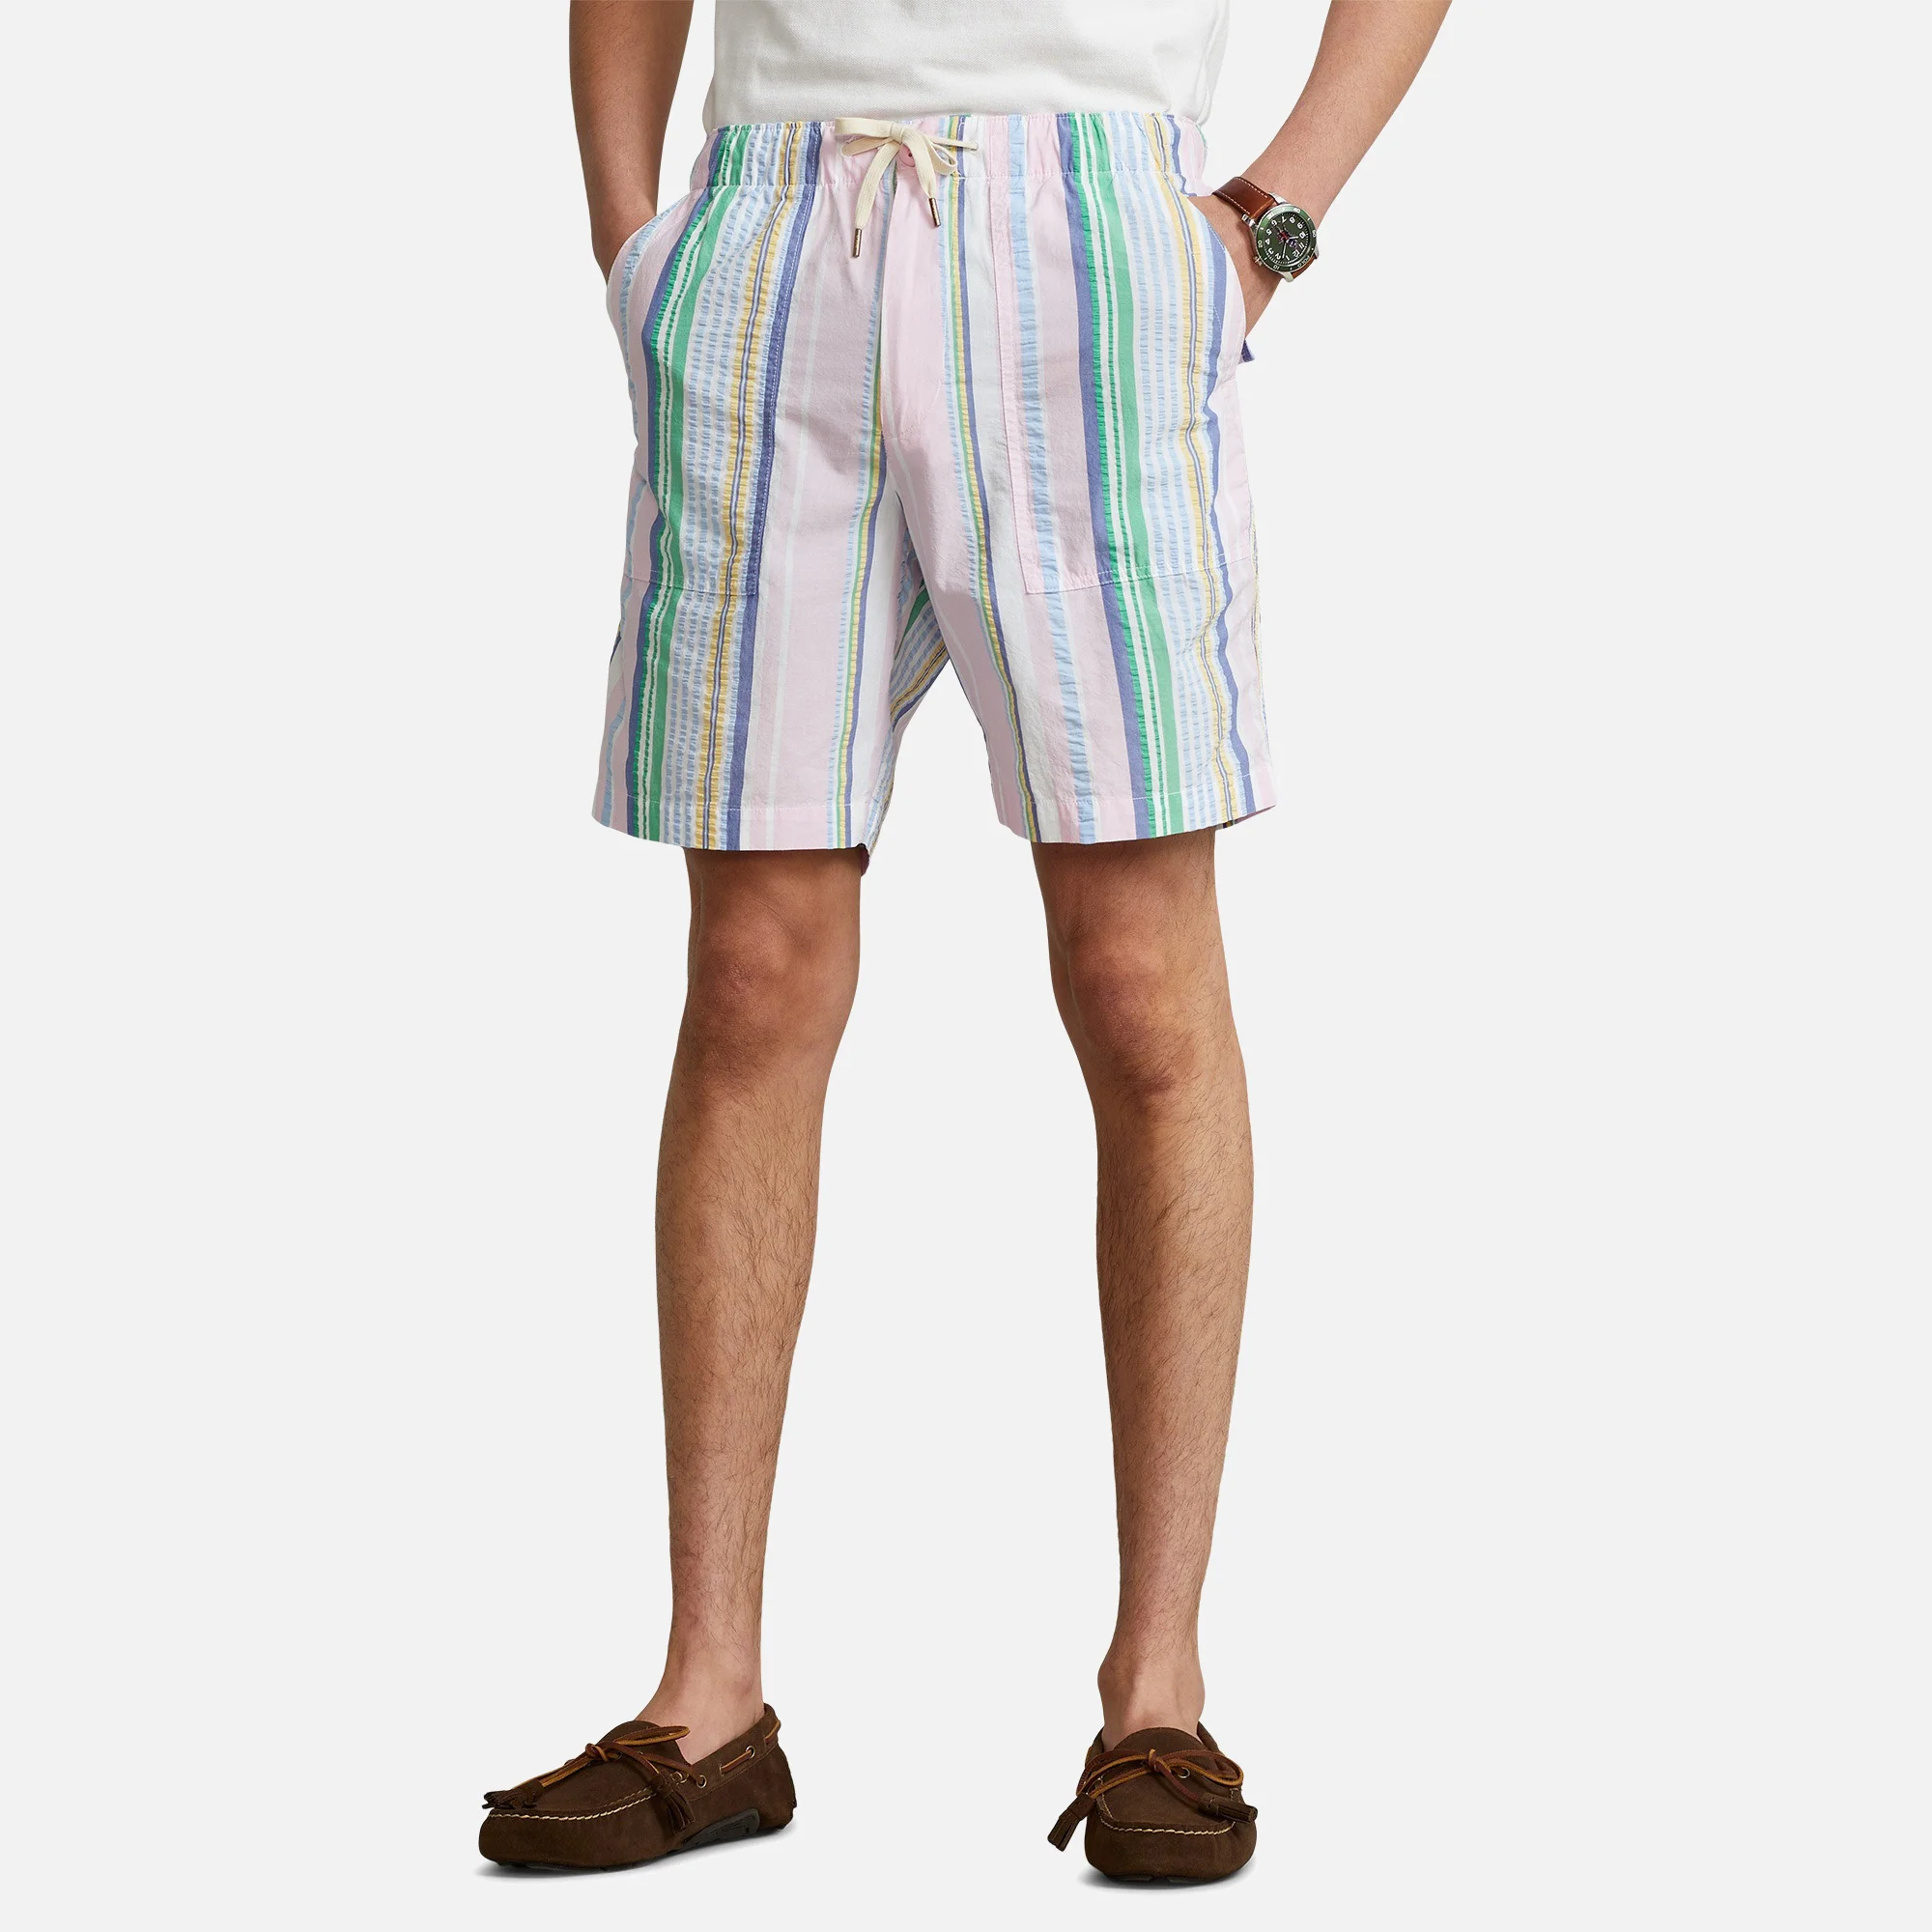 Polo Ralph Lauren Men's Seersucker Relaxed Fit Shorts - Pink/Blue Multi Image 1